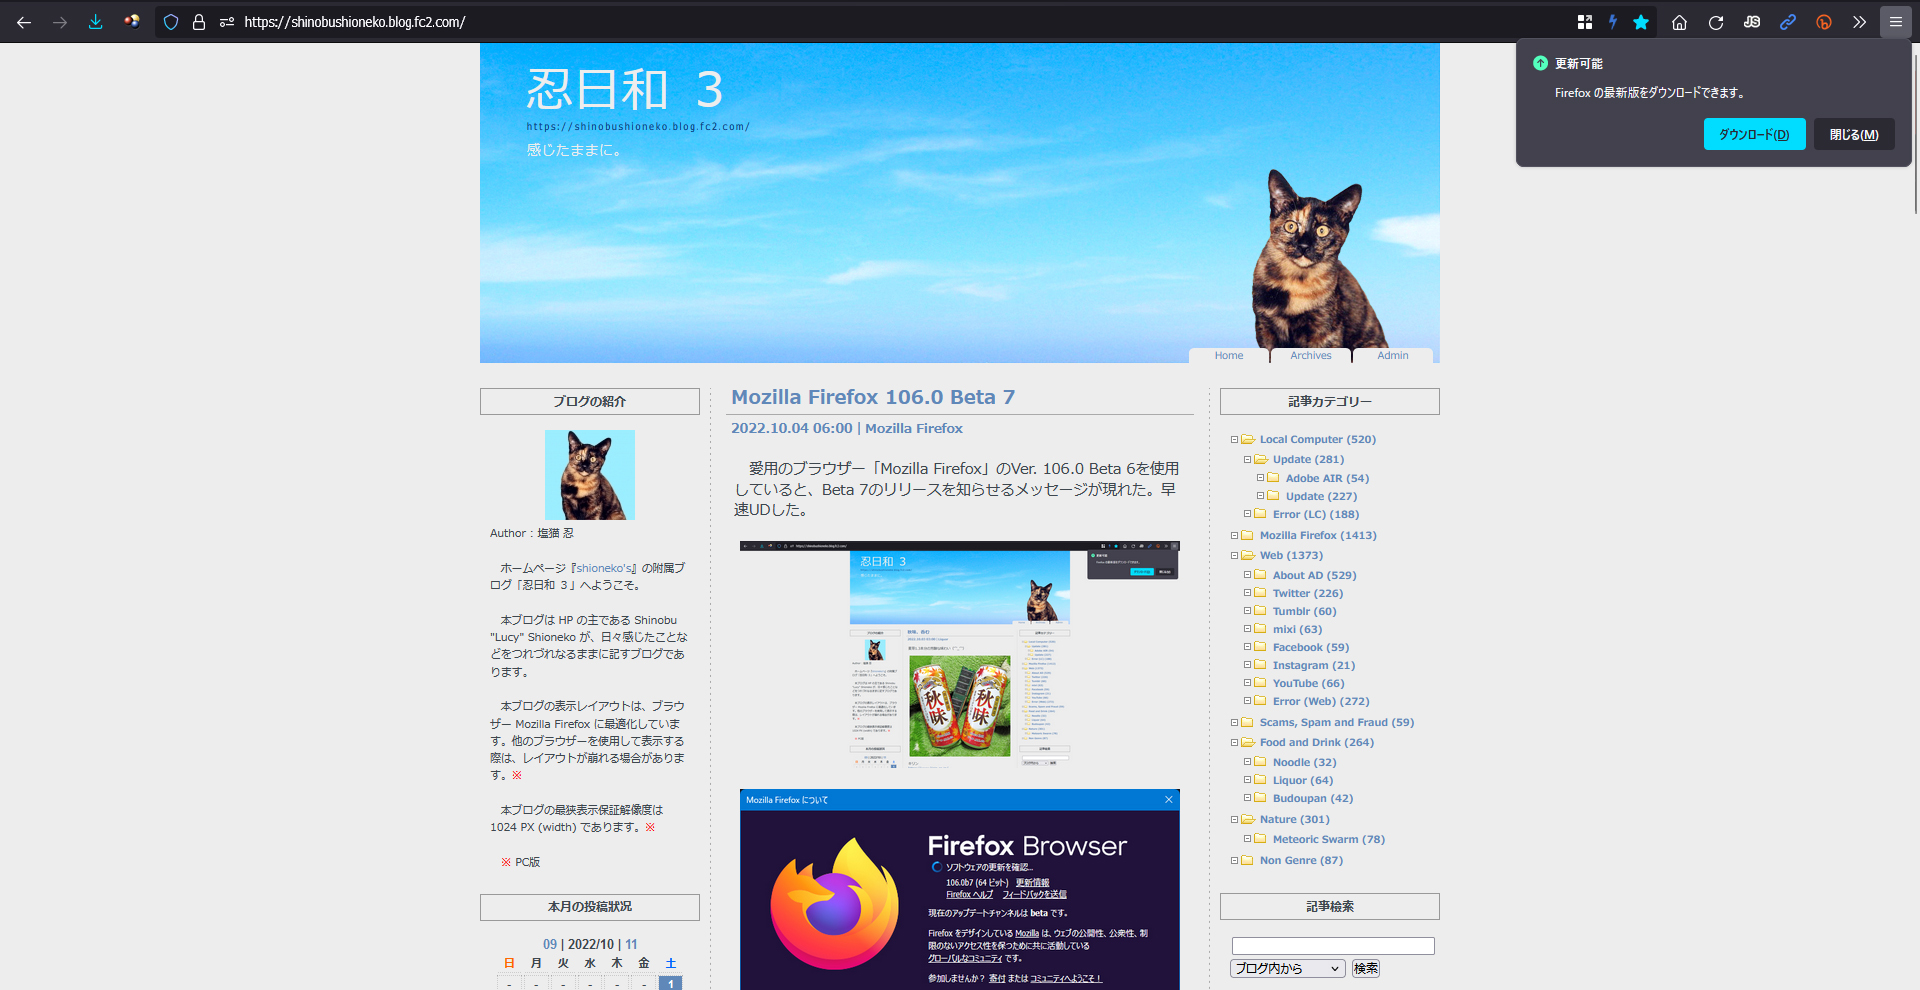 Mozilla Firefox 106.0 Beta 8